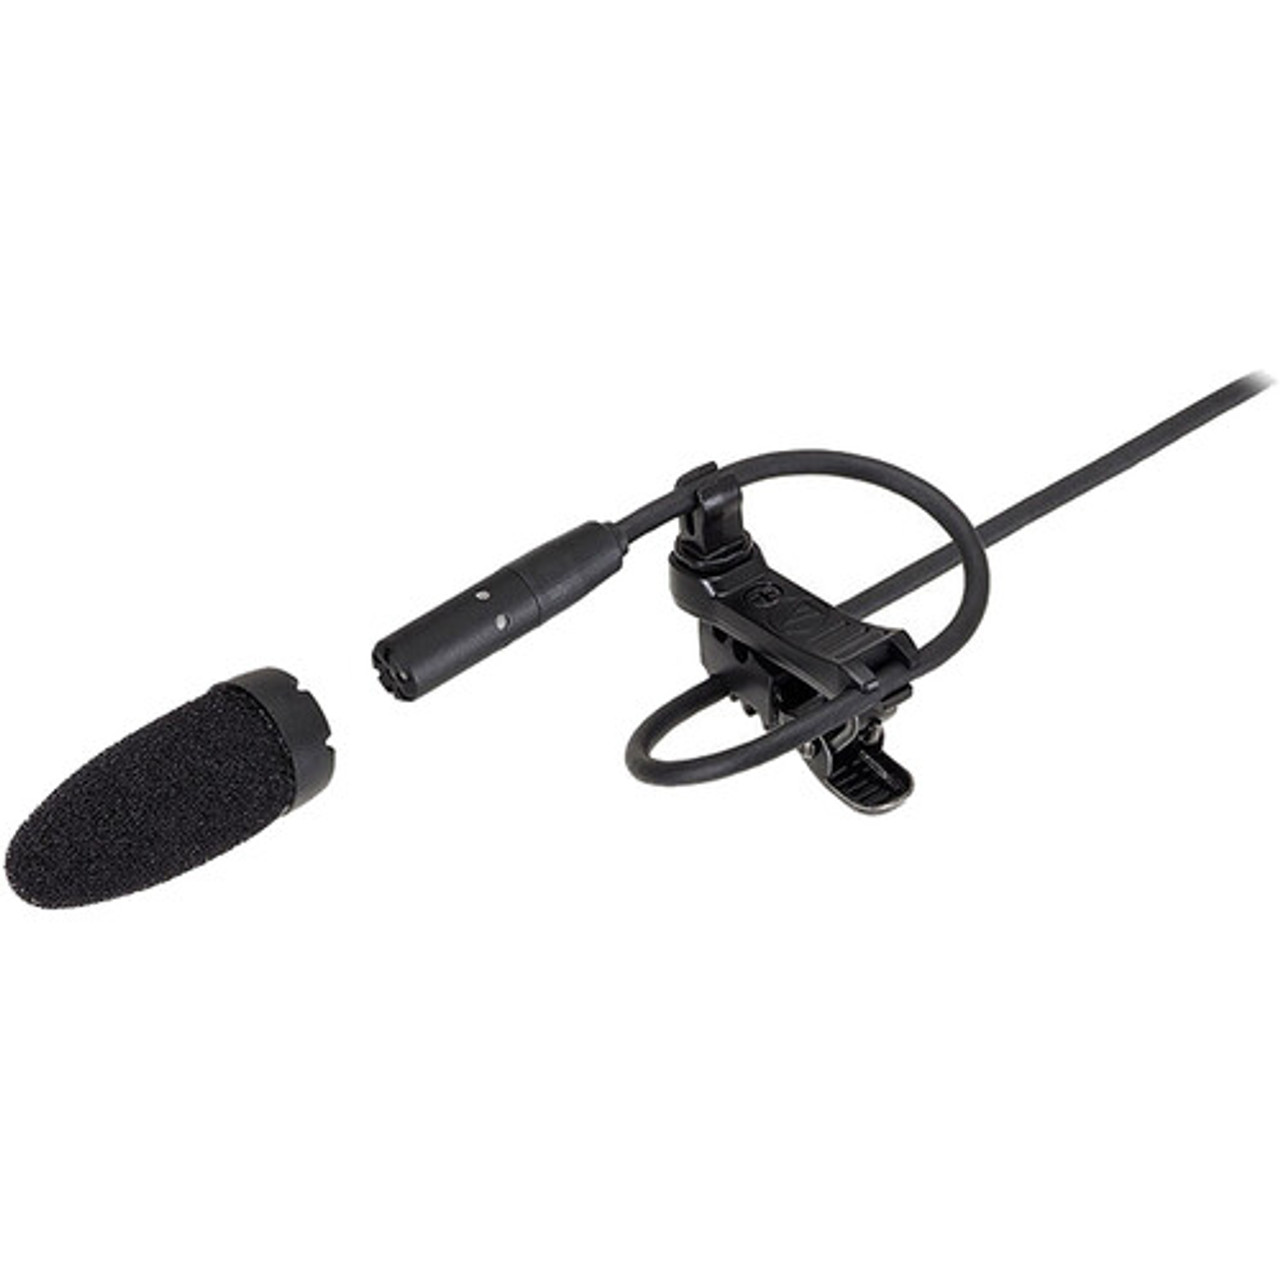 Audio-Technica BP898cT4 Subminiature Cardioid Lavalier Microphone (Black, TA4F Connector) (BP898CT4)

